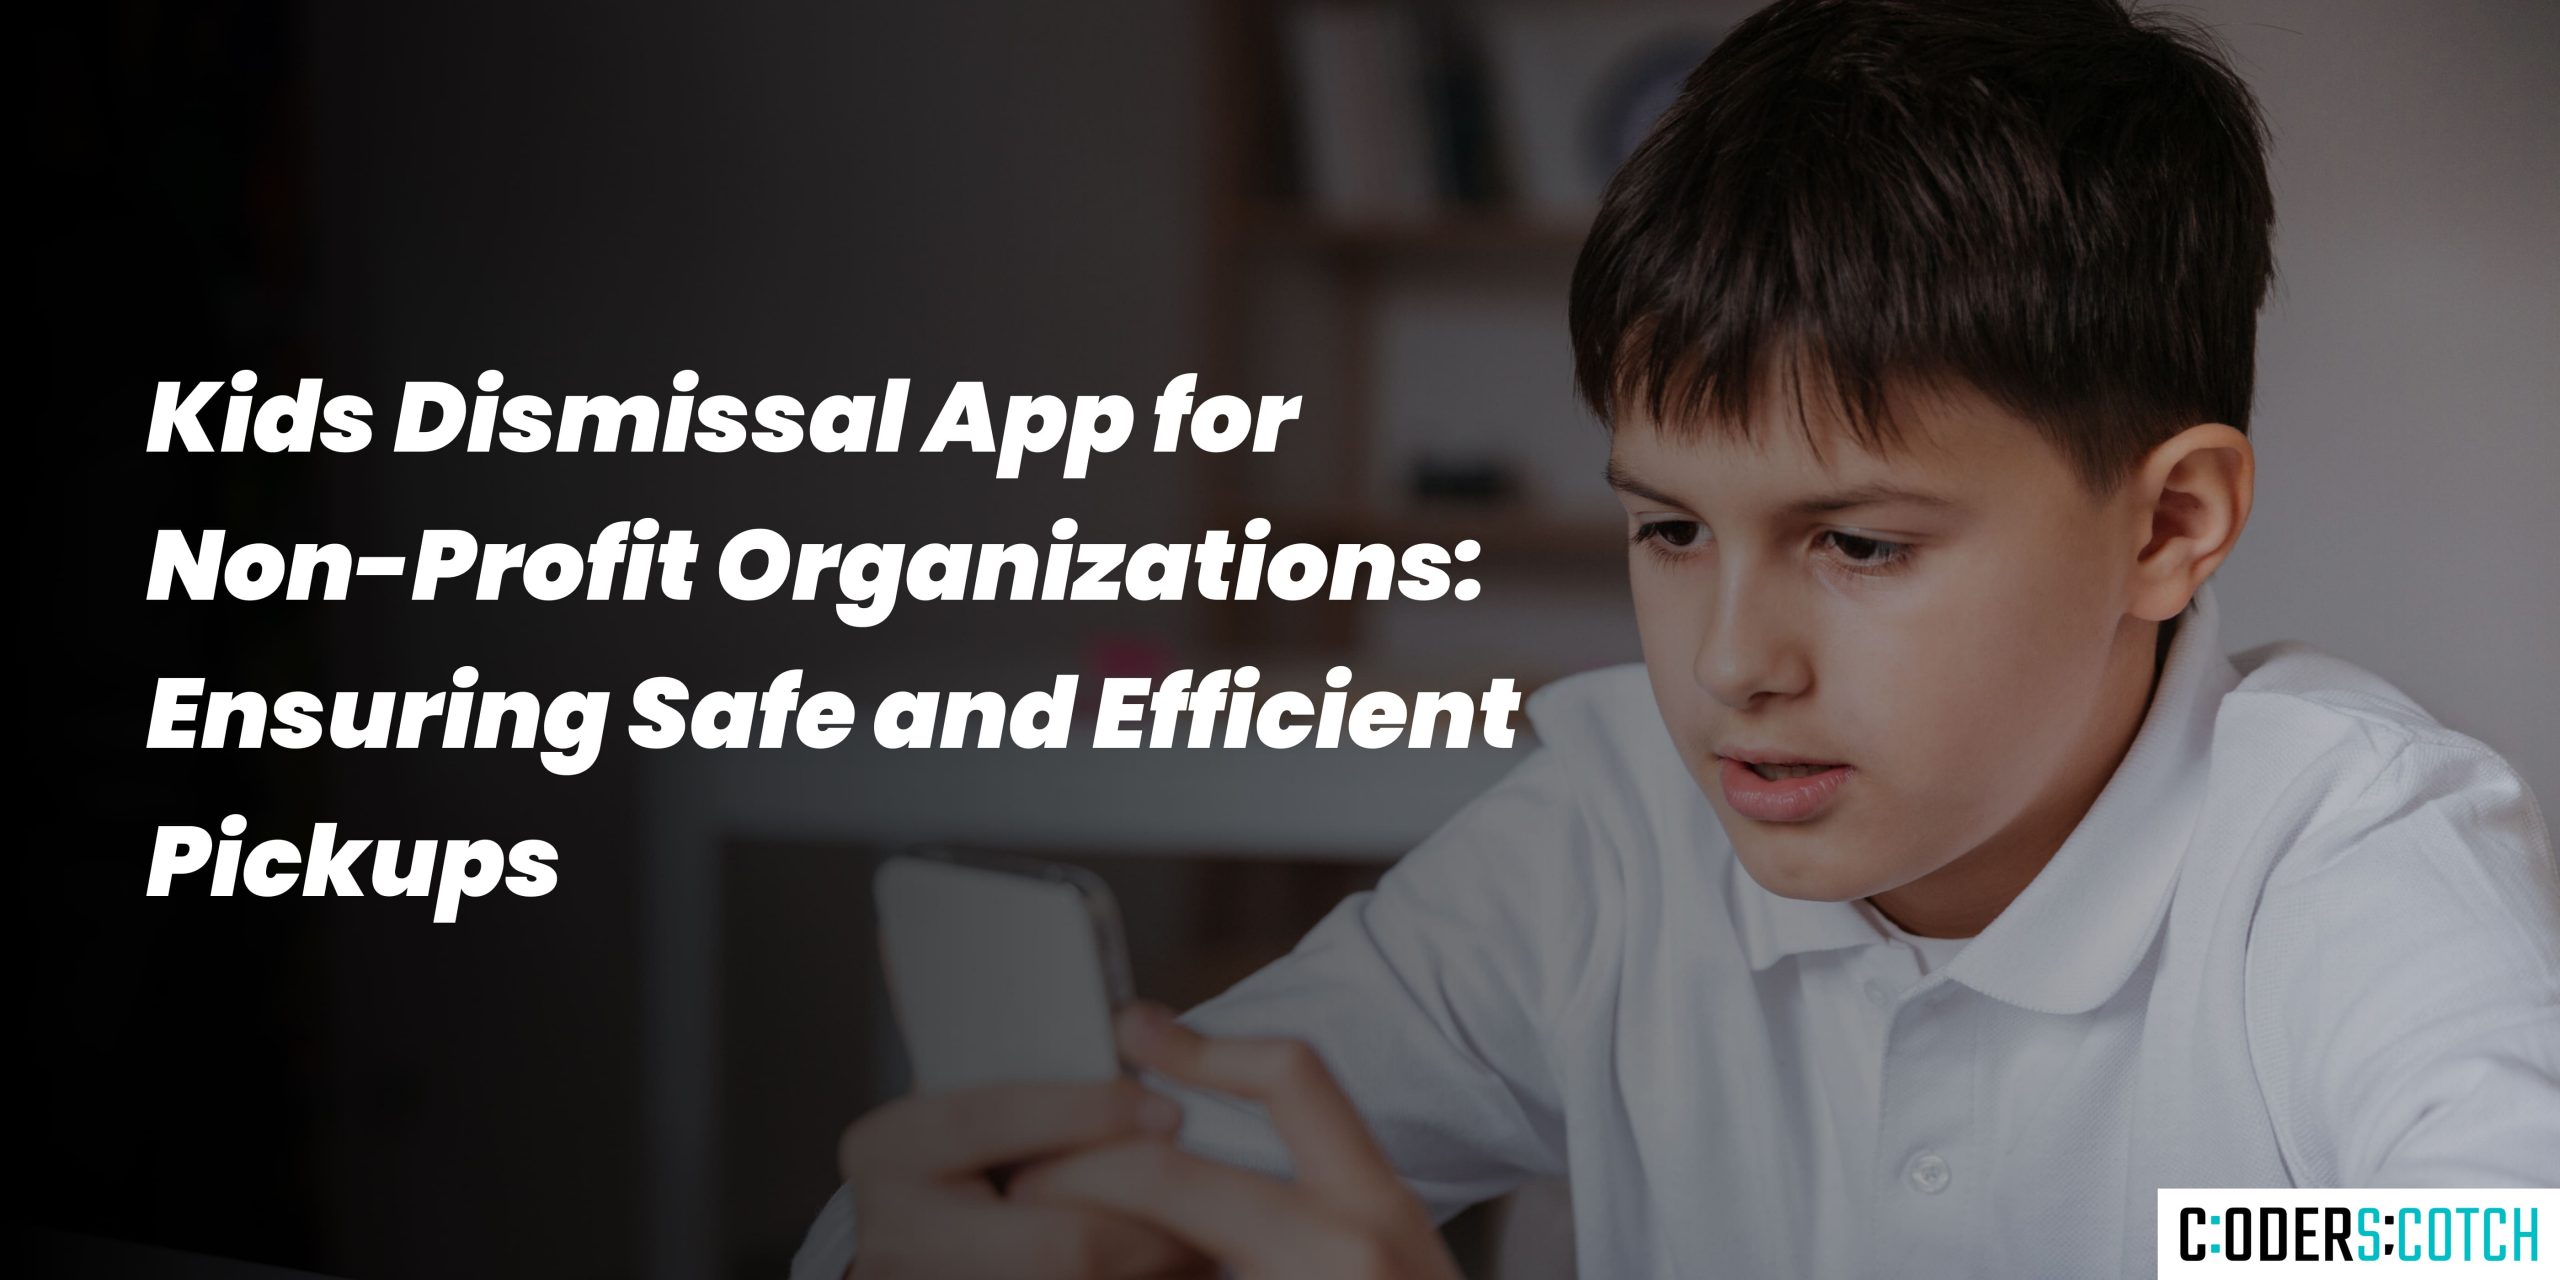 Kids Dismissal App for Non-Profit Organizations